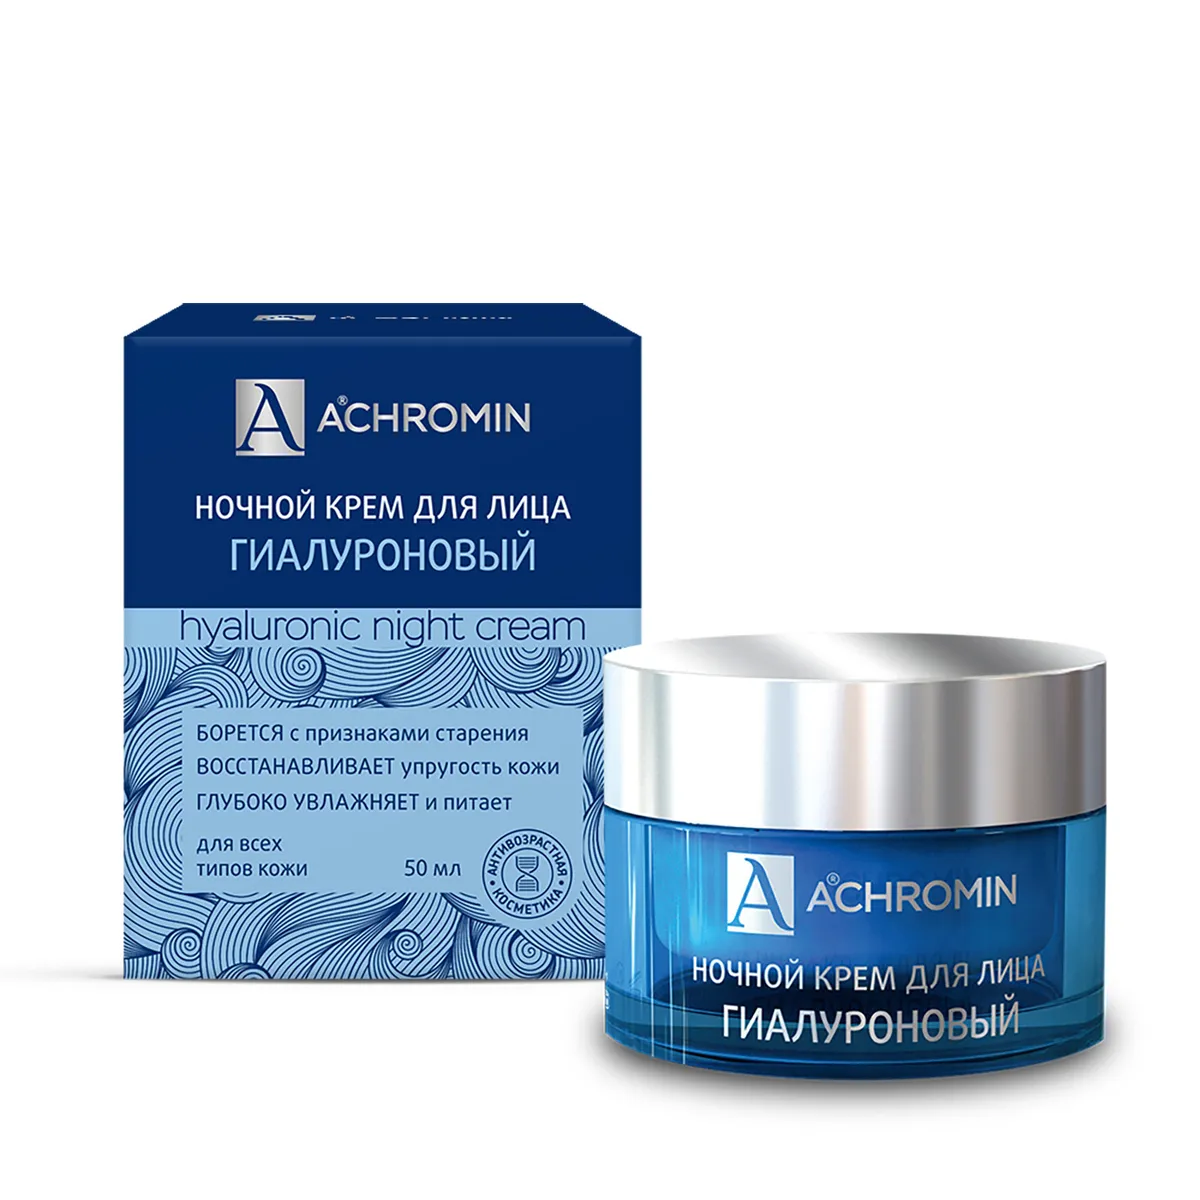 Achromin ® Ночной гиалуроновый крем для лица, банка 50 мл anti-age